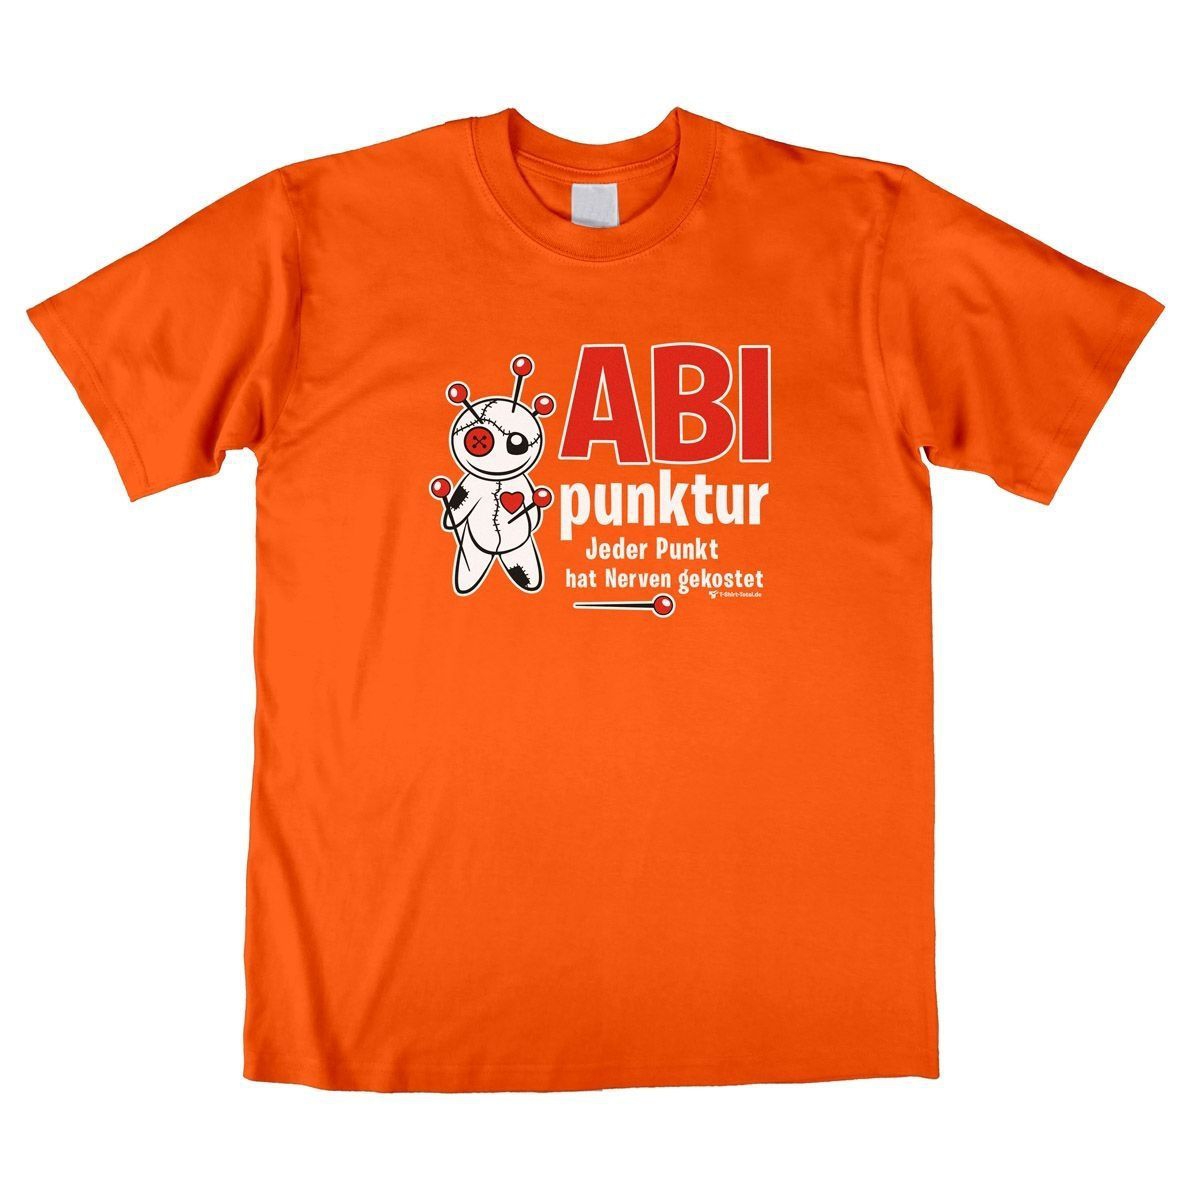 ABIpunktur Unisex T-Shirt orange Small